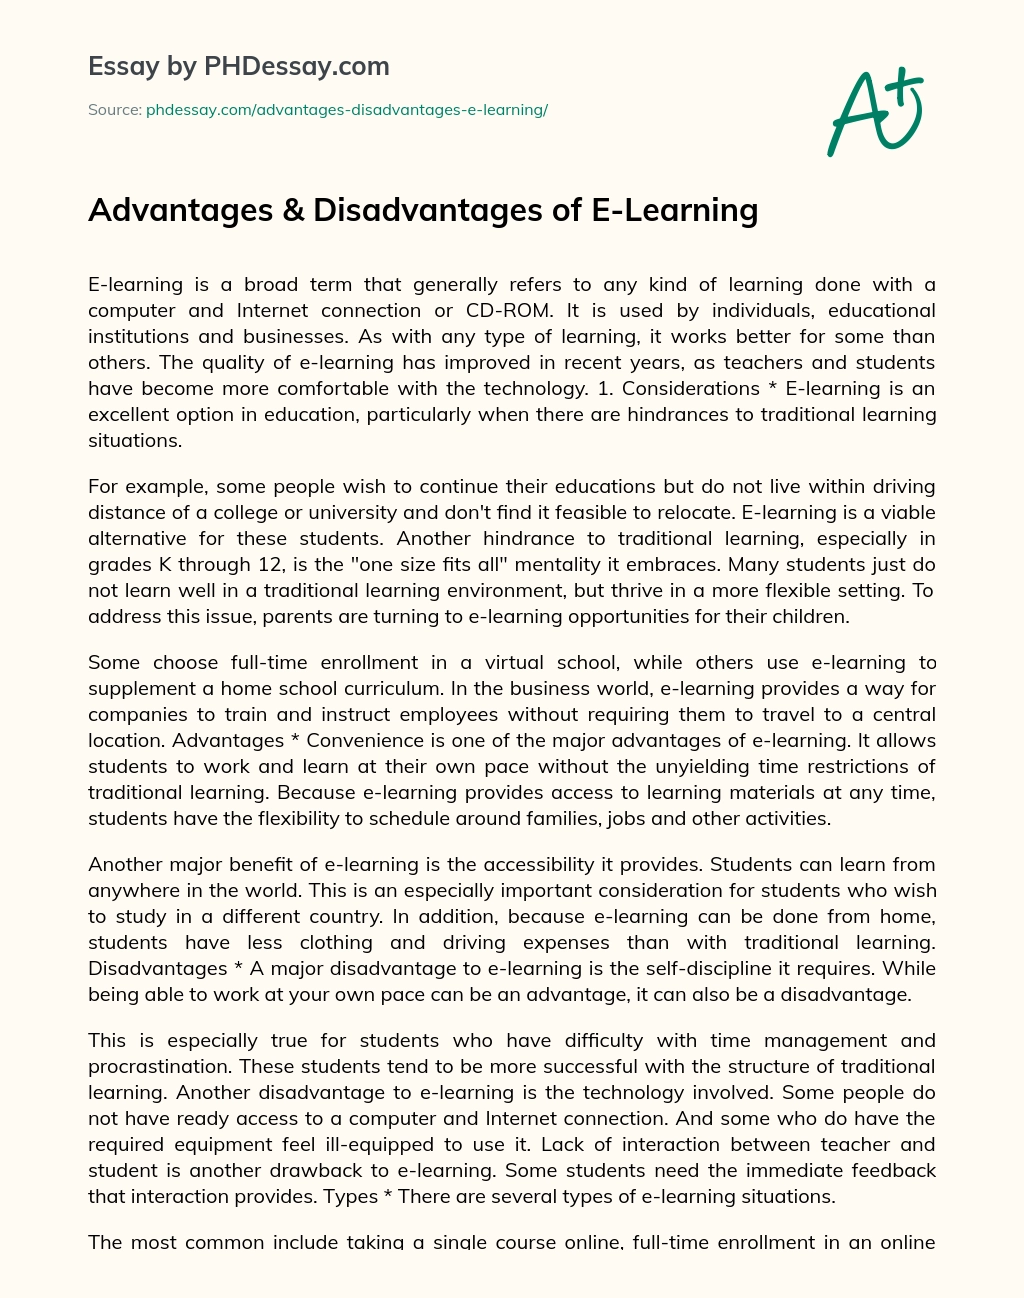 Advantages & Disadvantages of E-Learning essay